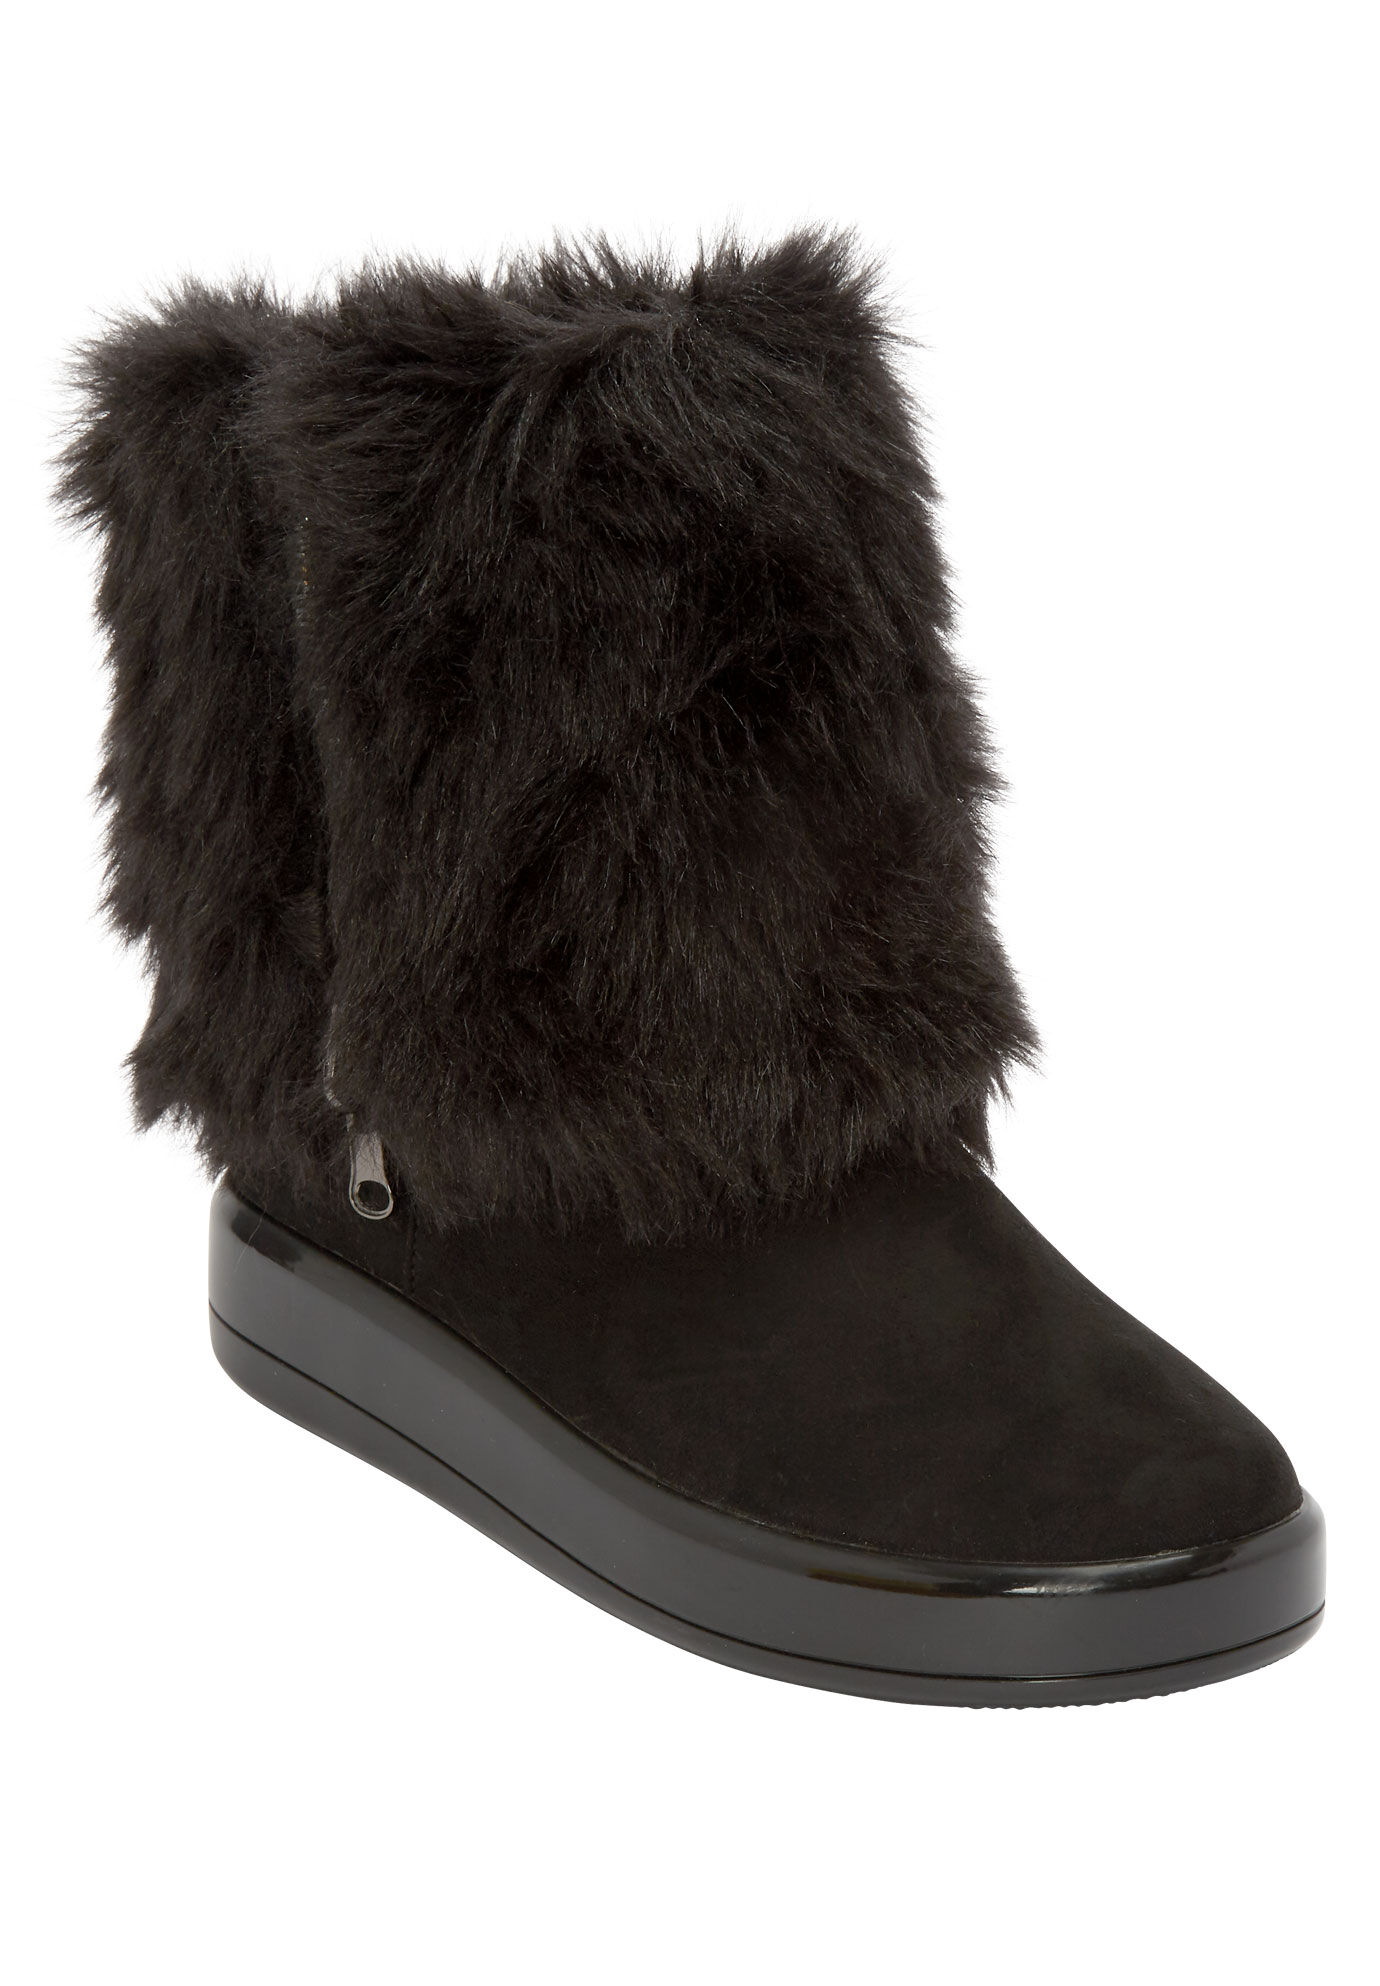 women's winter boots extra wide width